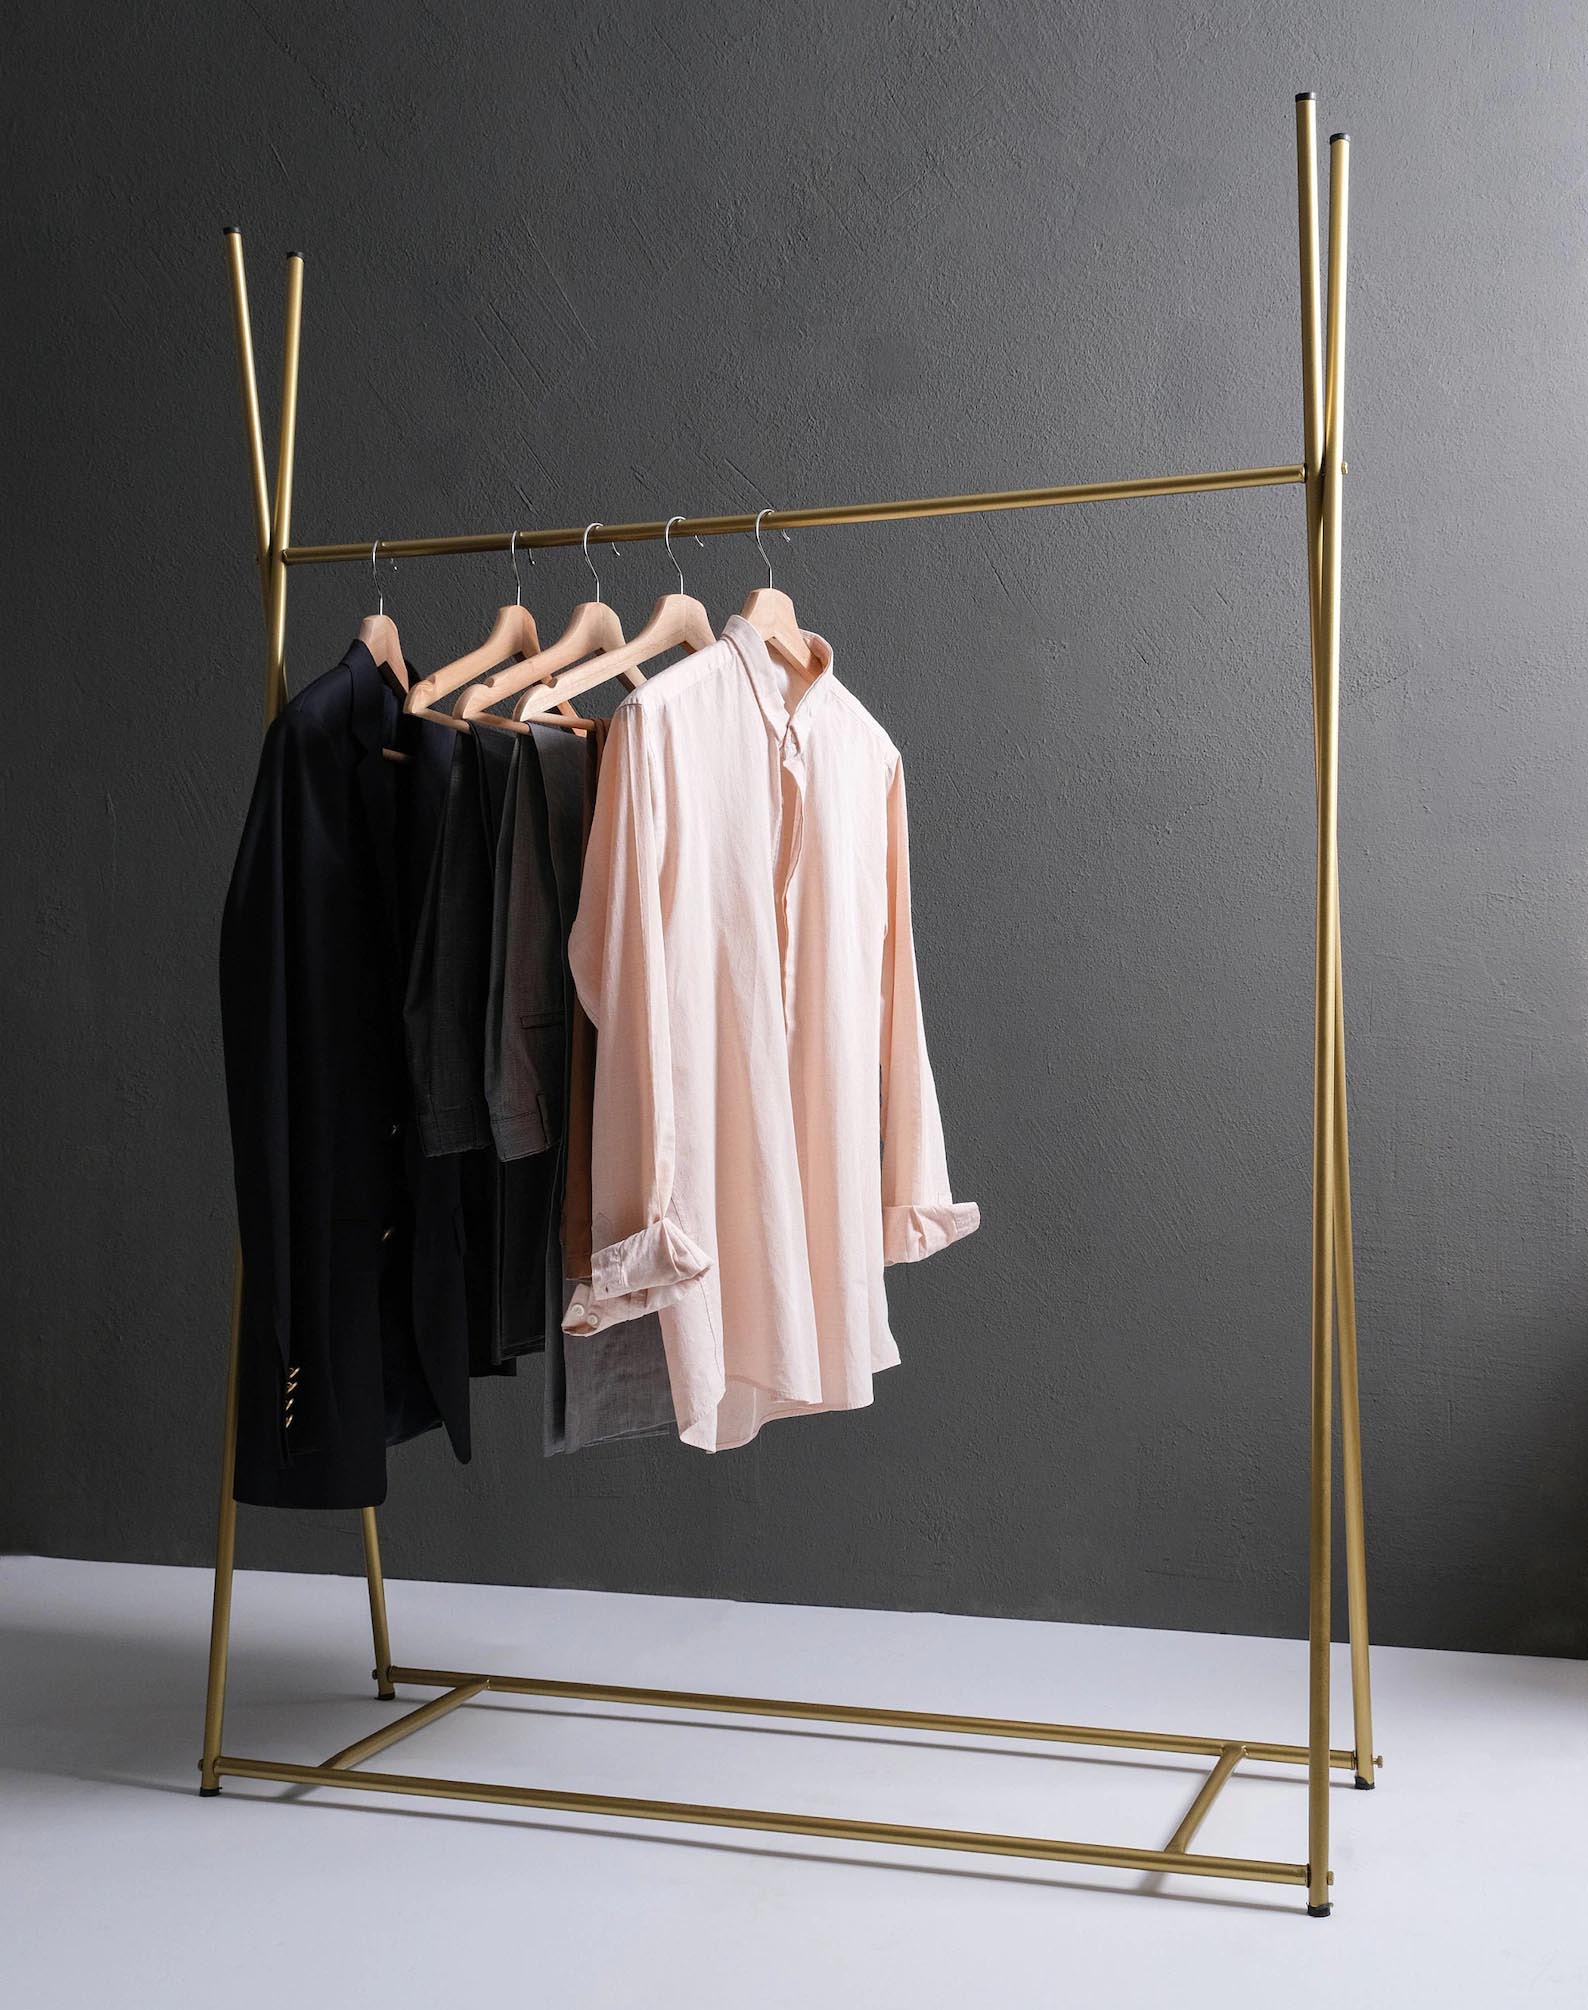 https://www.contemporist.com/wp-content/uploads/2021/09/modern-minimalist-gold-clothes-rack-storage-070921-803-01.jpg